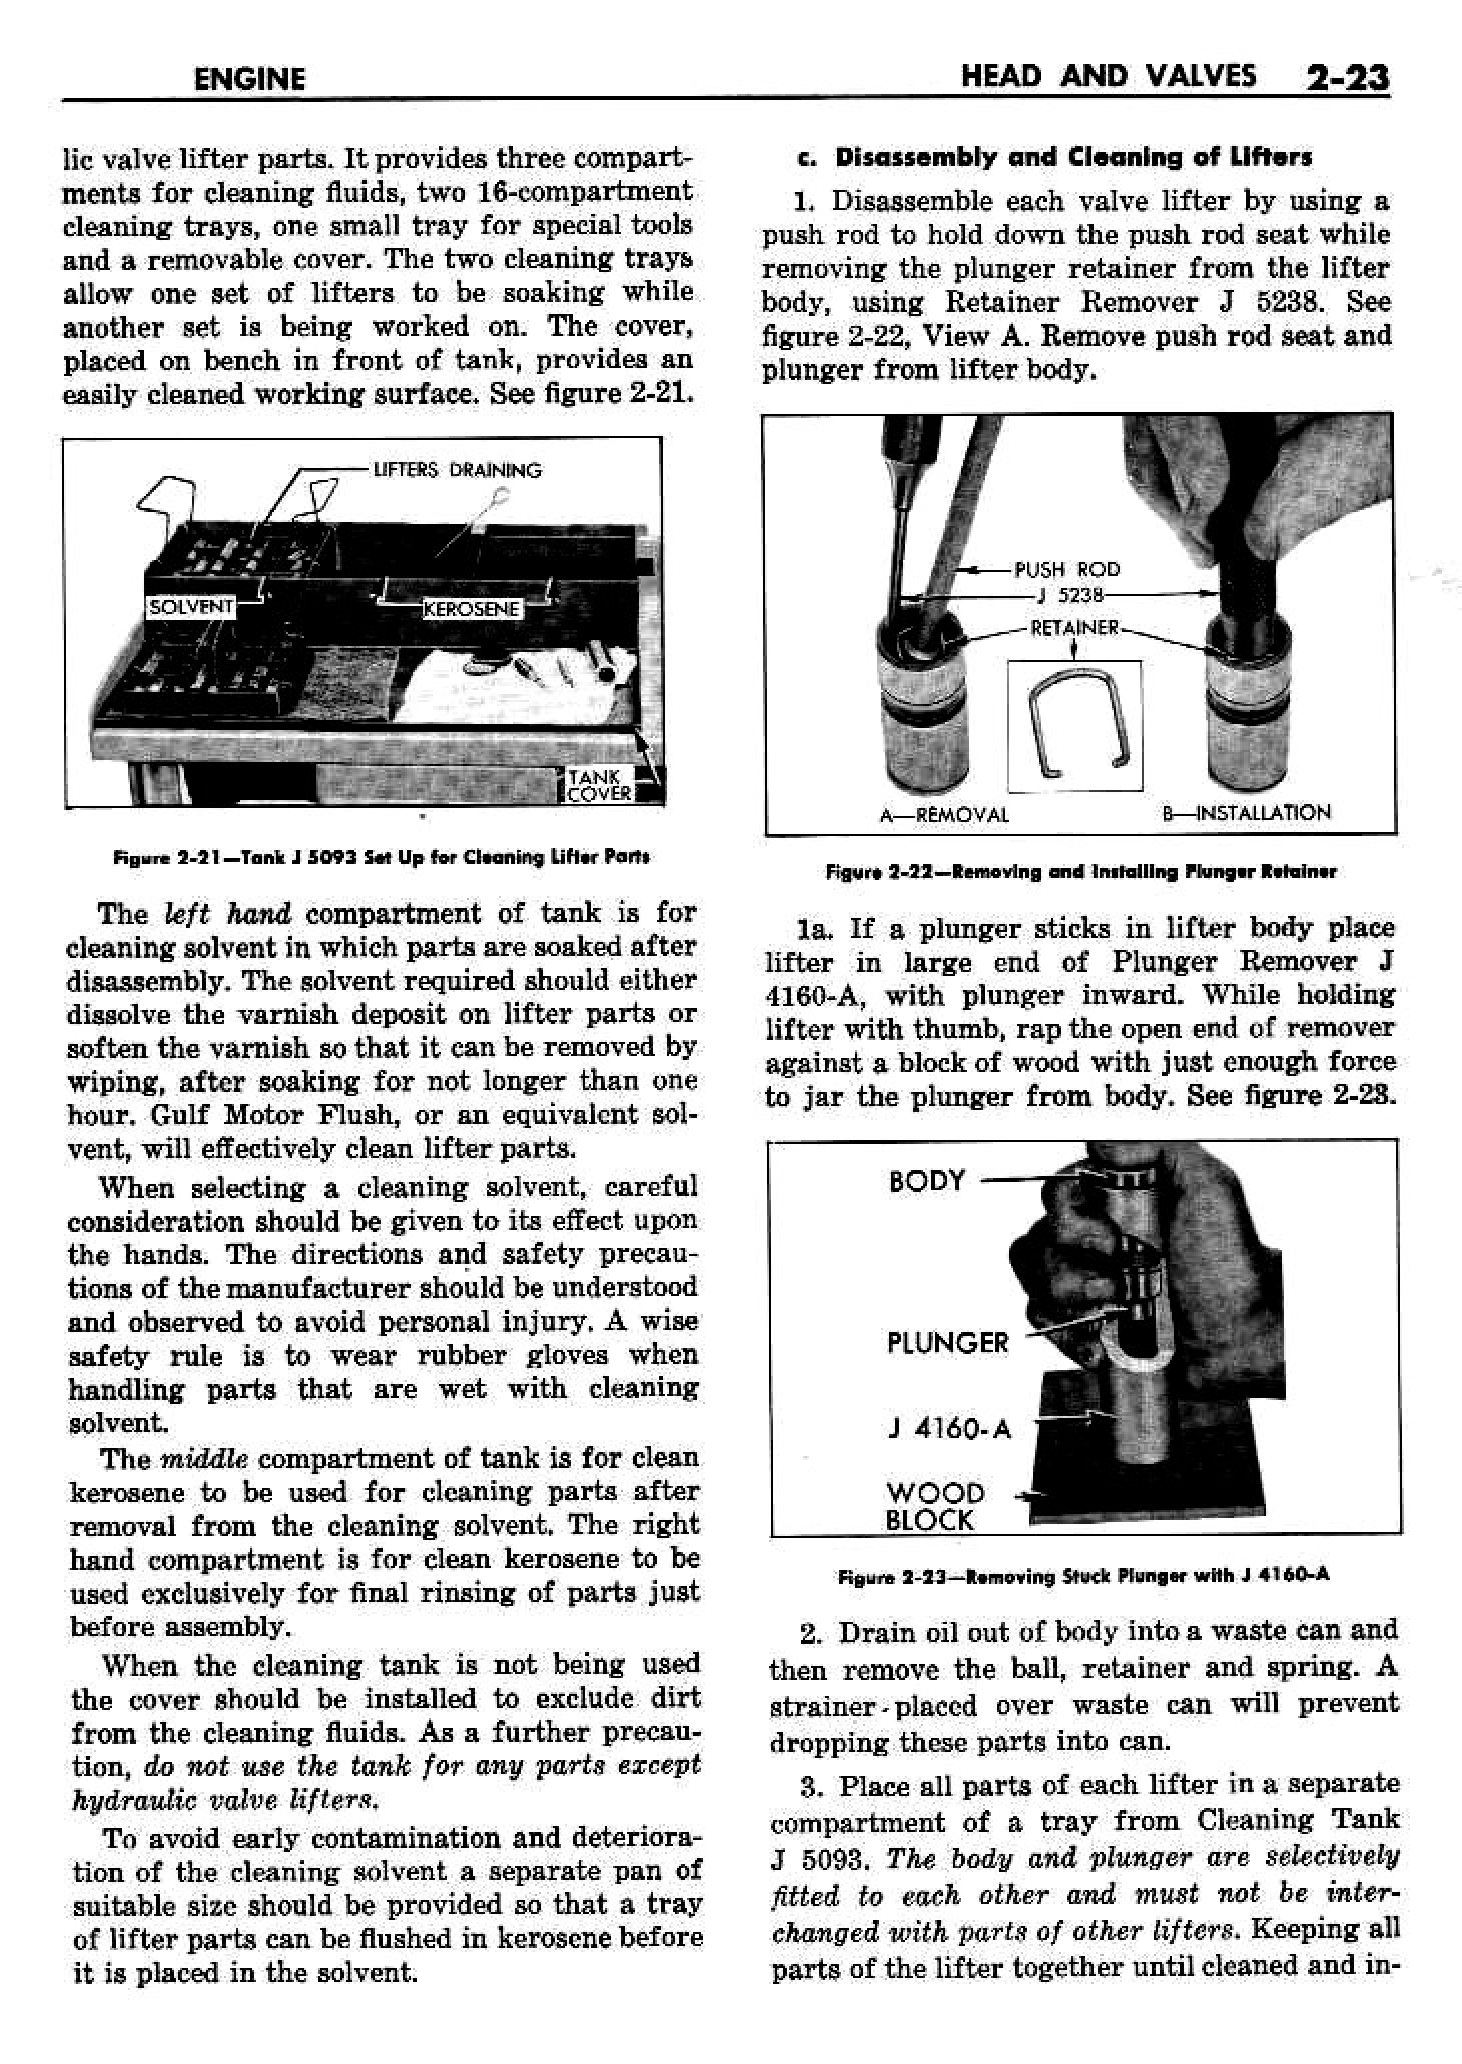 n_03 1958 Buick Shop Manual - Engine_23.jpg